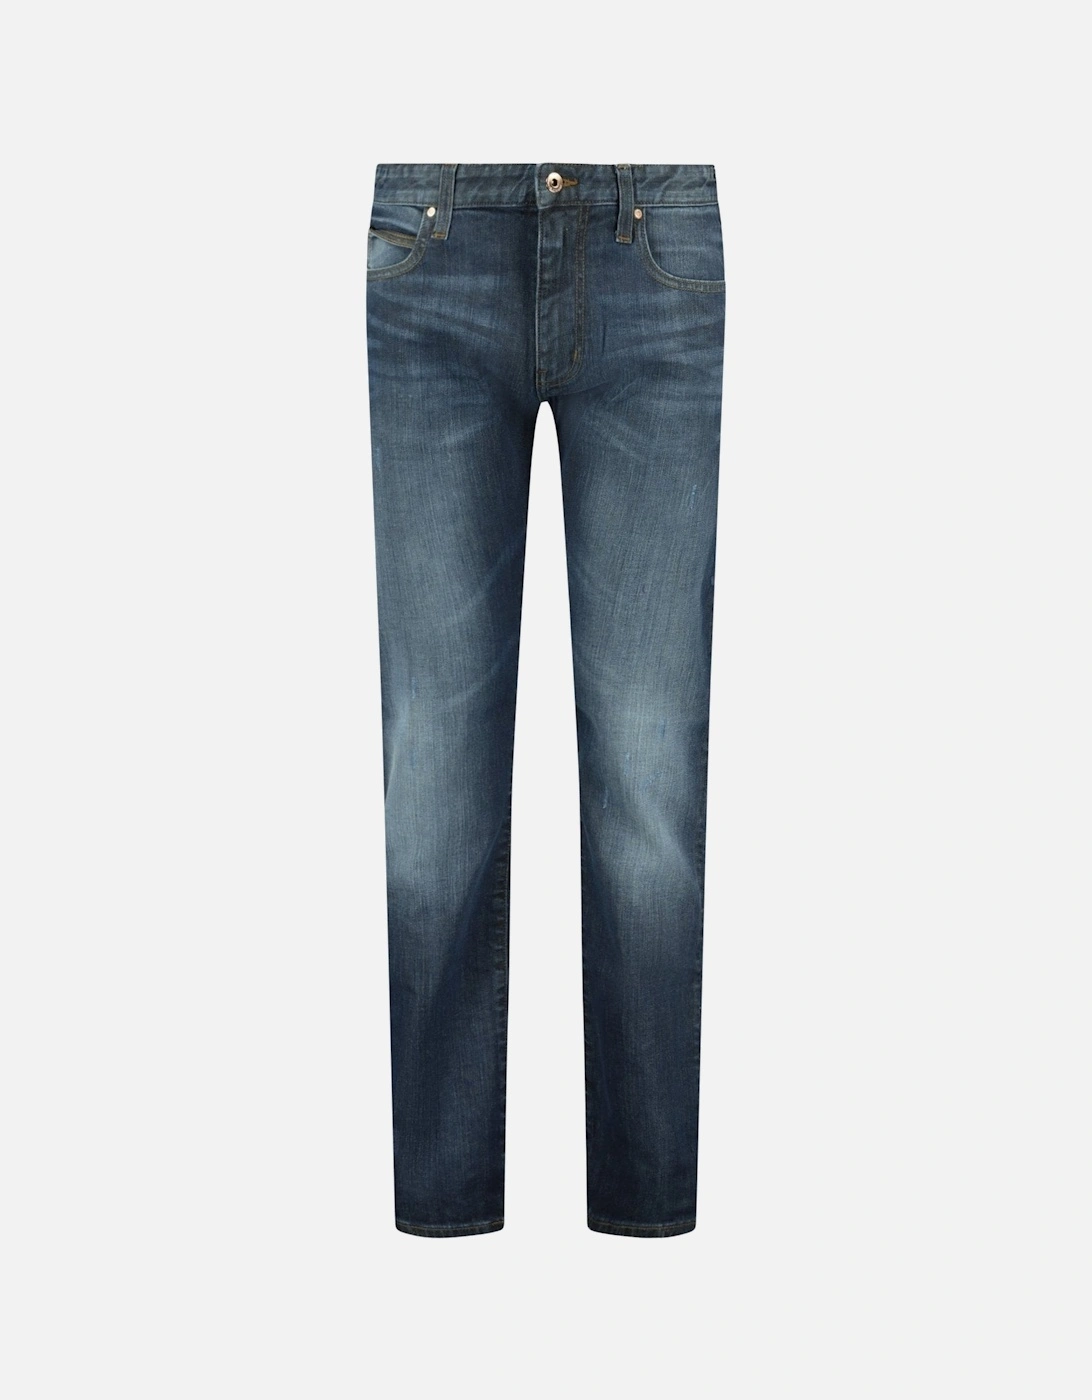 Jeans J45 Slim Fit Dark Blue Fade, 4 of 3